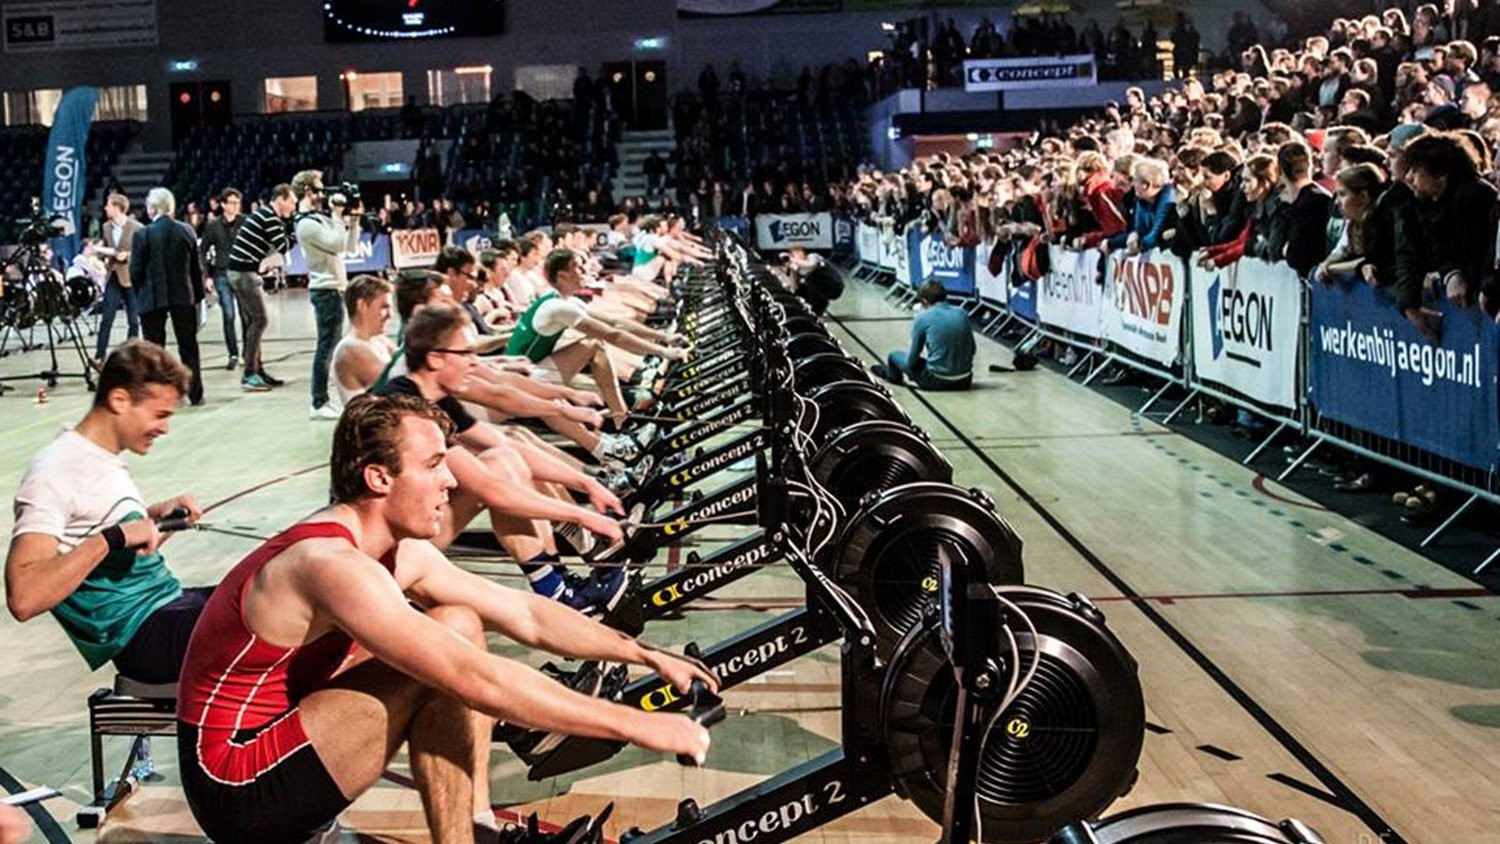 World Rowing claim the indoor discipline is growing worldwide ©World Rowing